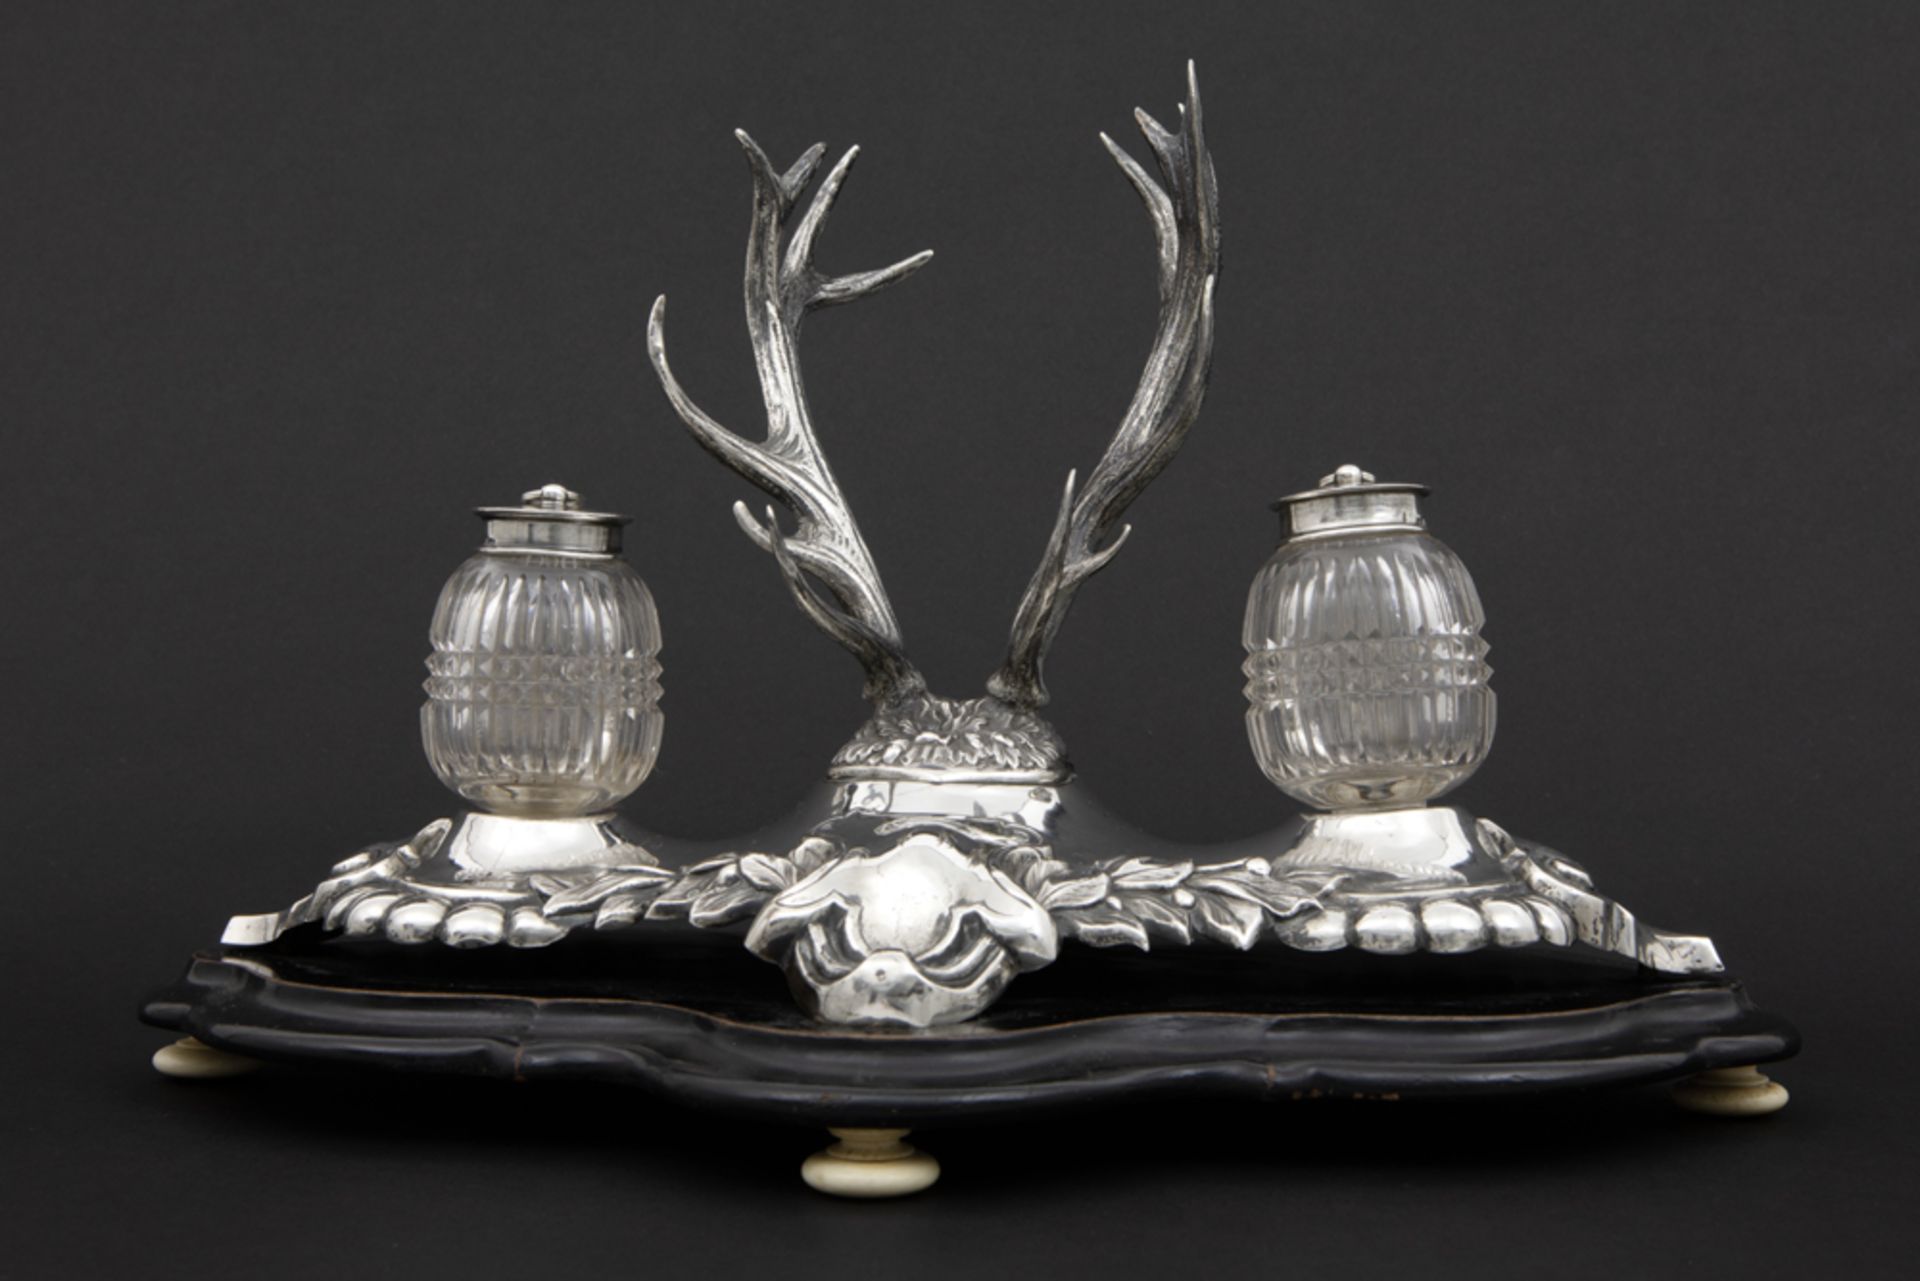 antique Dutch desk set in ebonised wood, crystal and silver || Antiek Nederlands bureaustel in